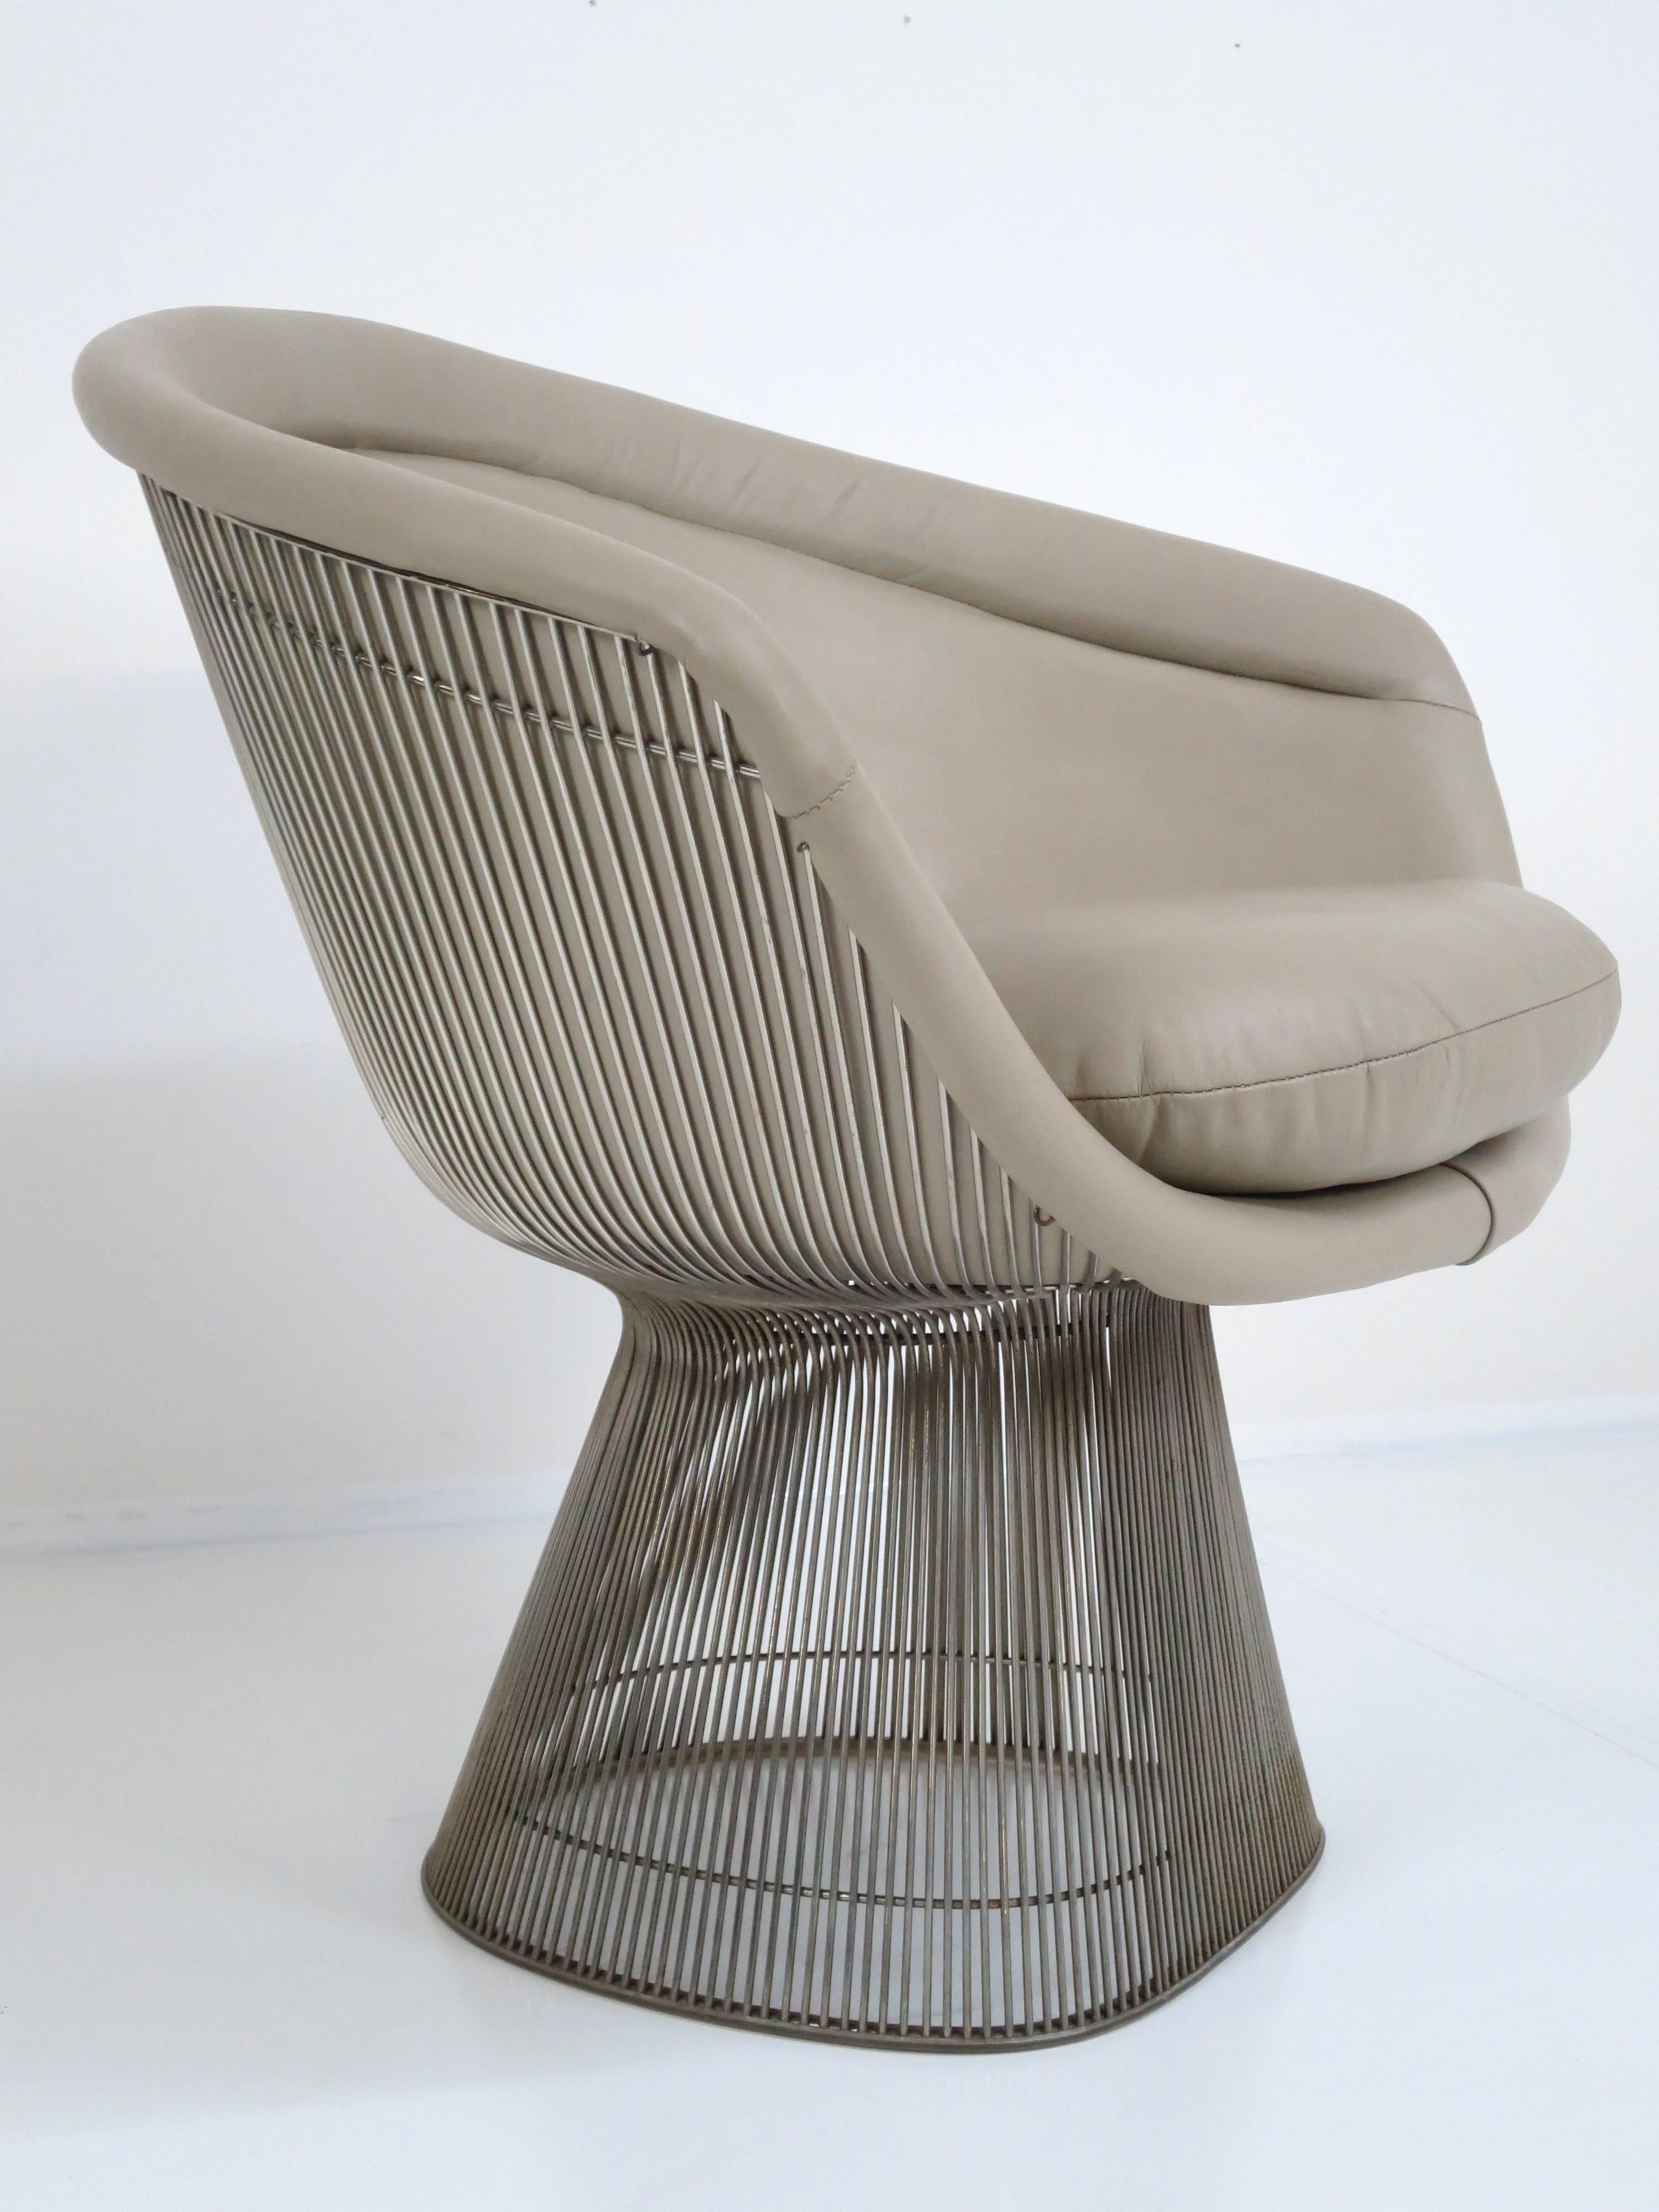 American Warren Platner Lounge Chair for Knoll Inc